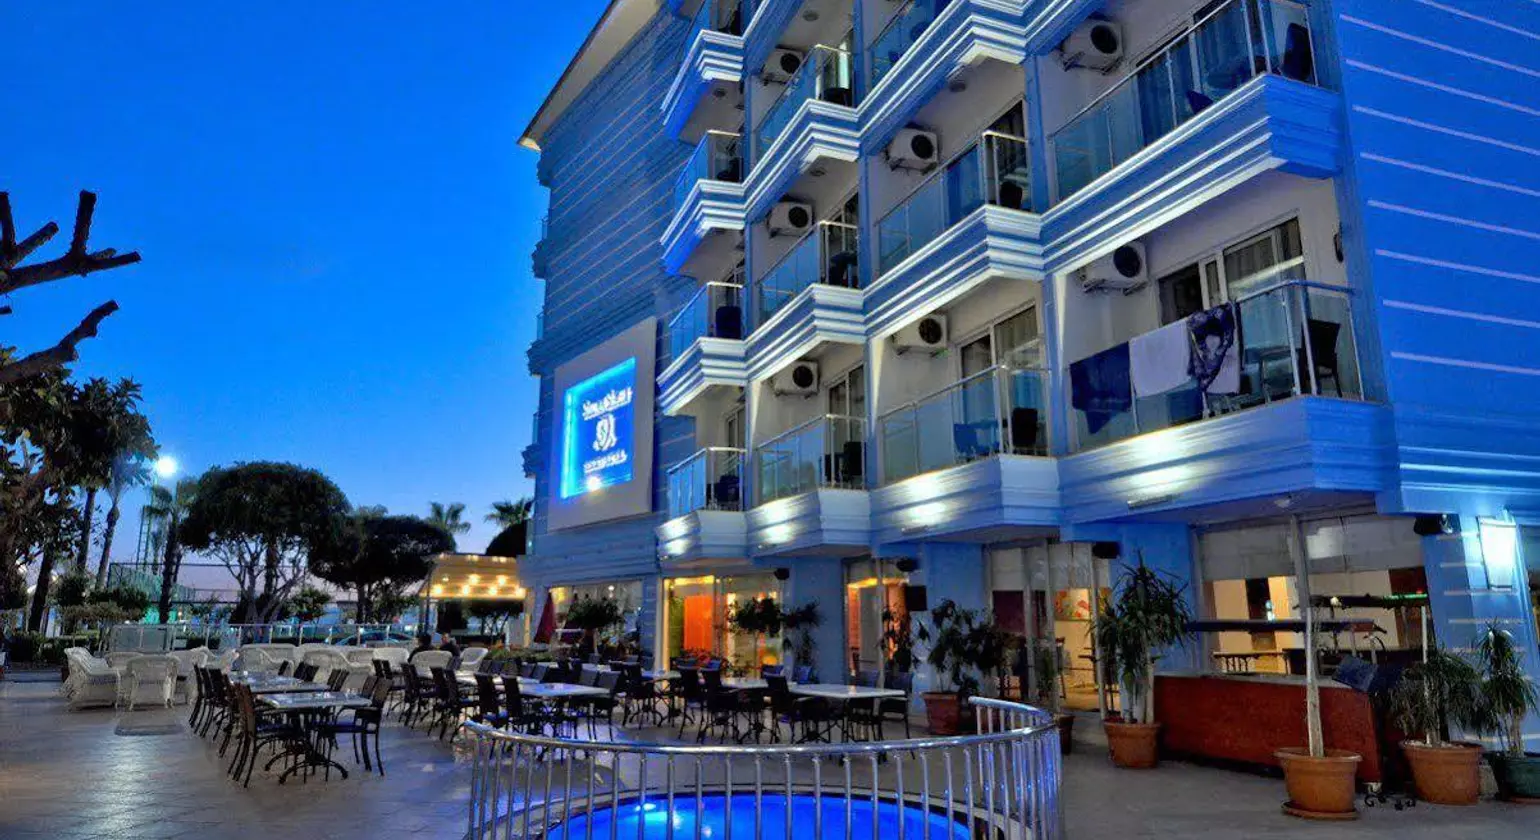 Sultan Sipahi Resort Hotel